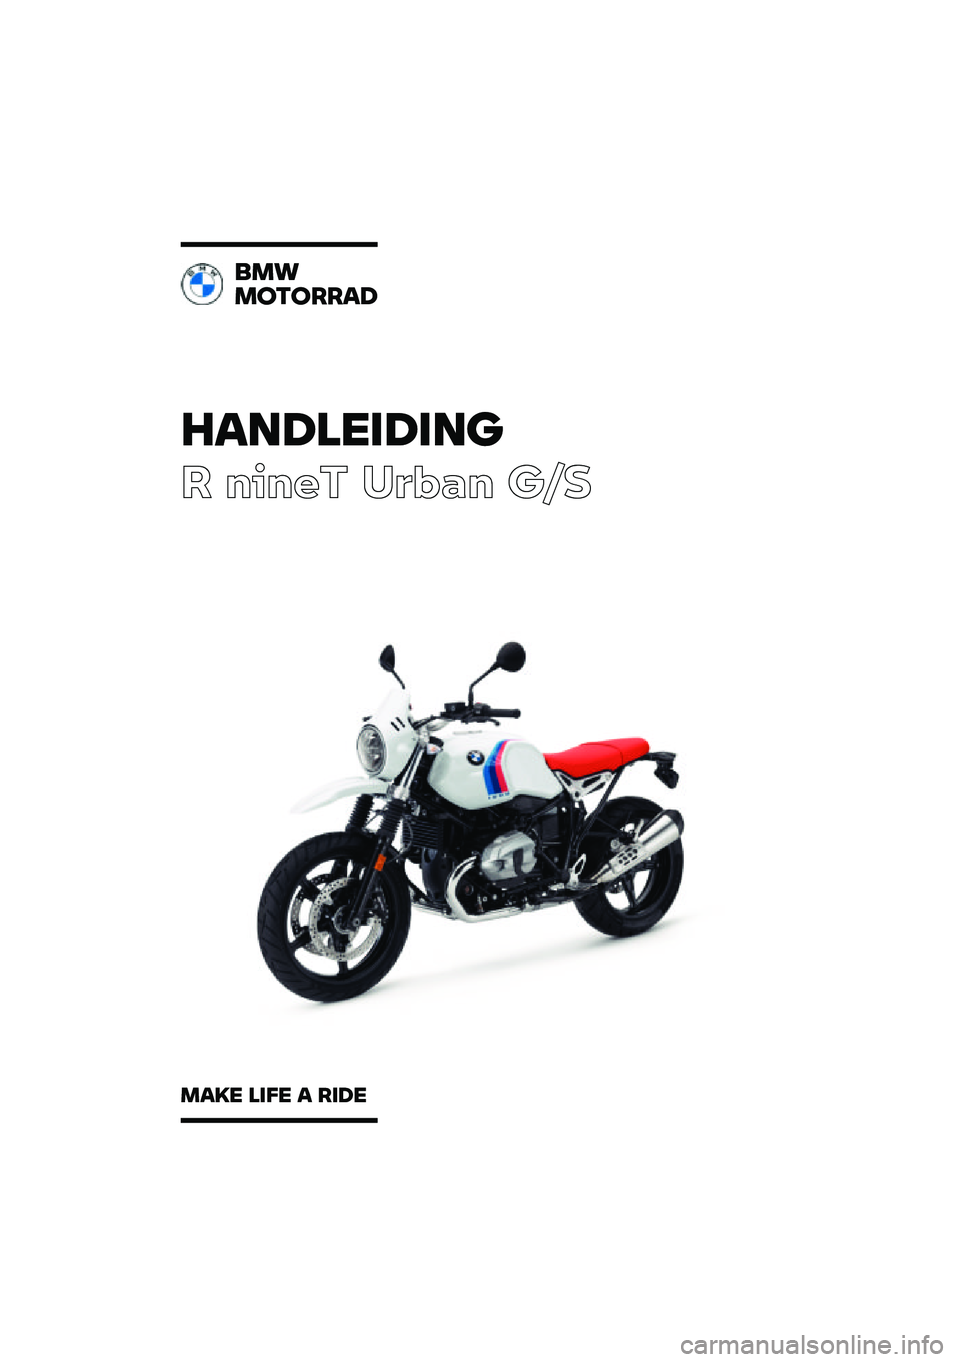 BMW MOTORRAD R NINE T URVAN G/S 2021  Handleiding (in Dutch) �������\b��\b��	
� ����� ��\b�	�
� ��\f�
�
��\f
��
��
����
���� ��\b�� � ��\b�� 